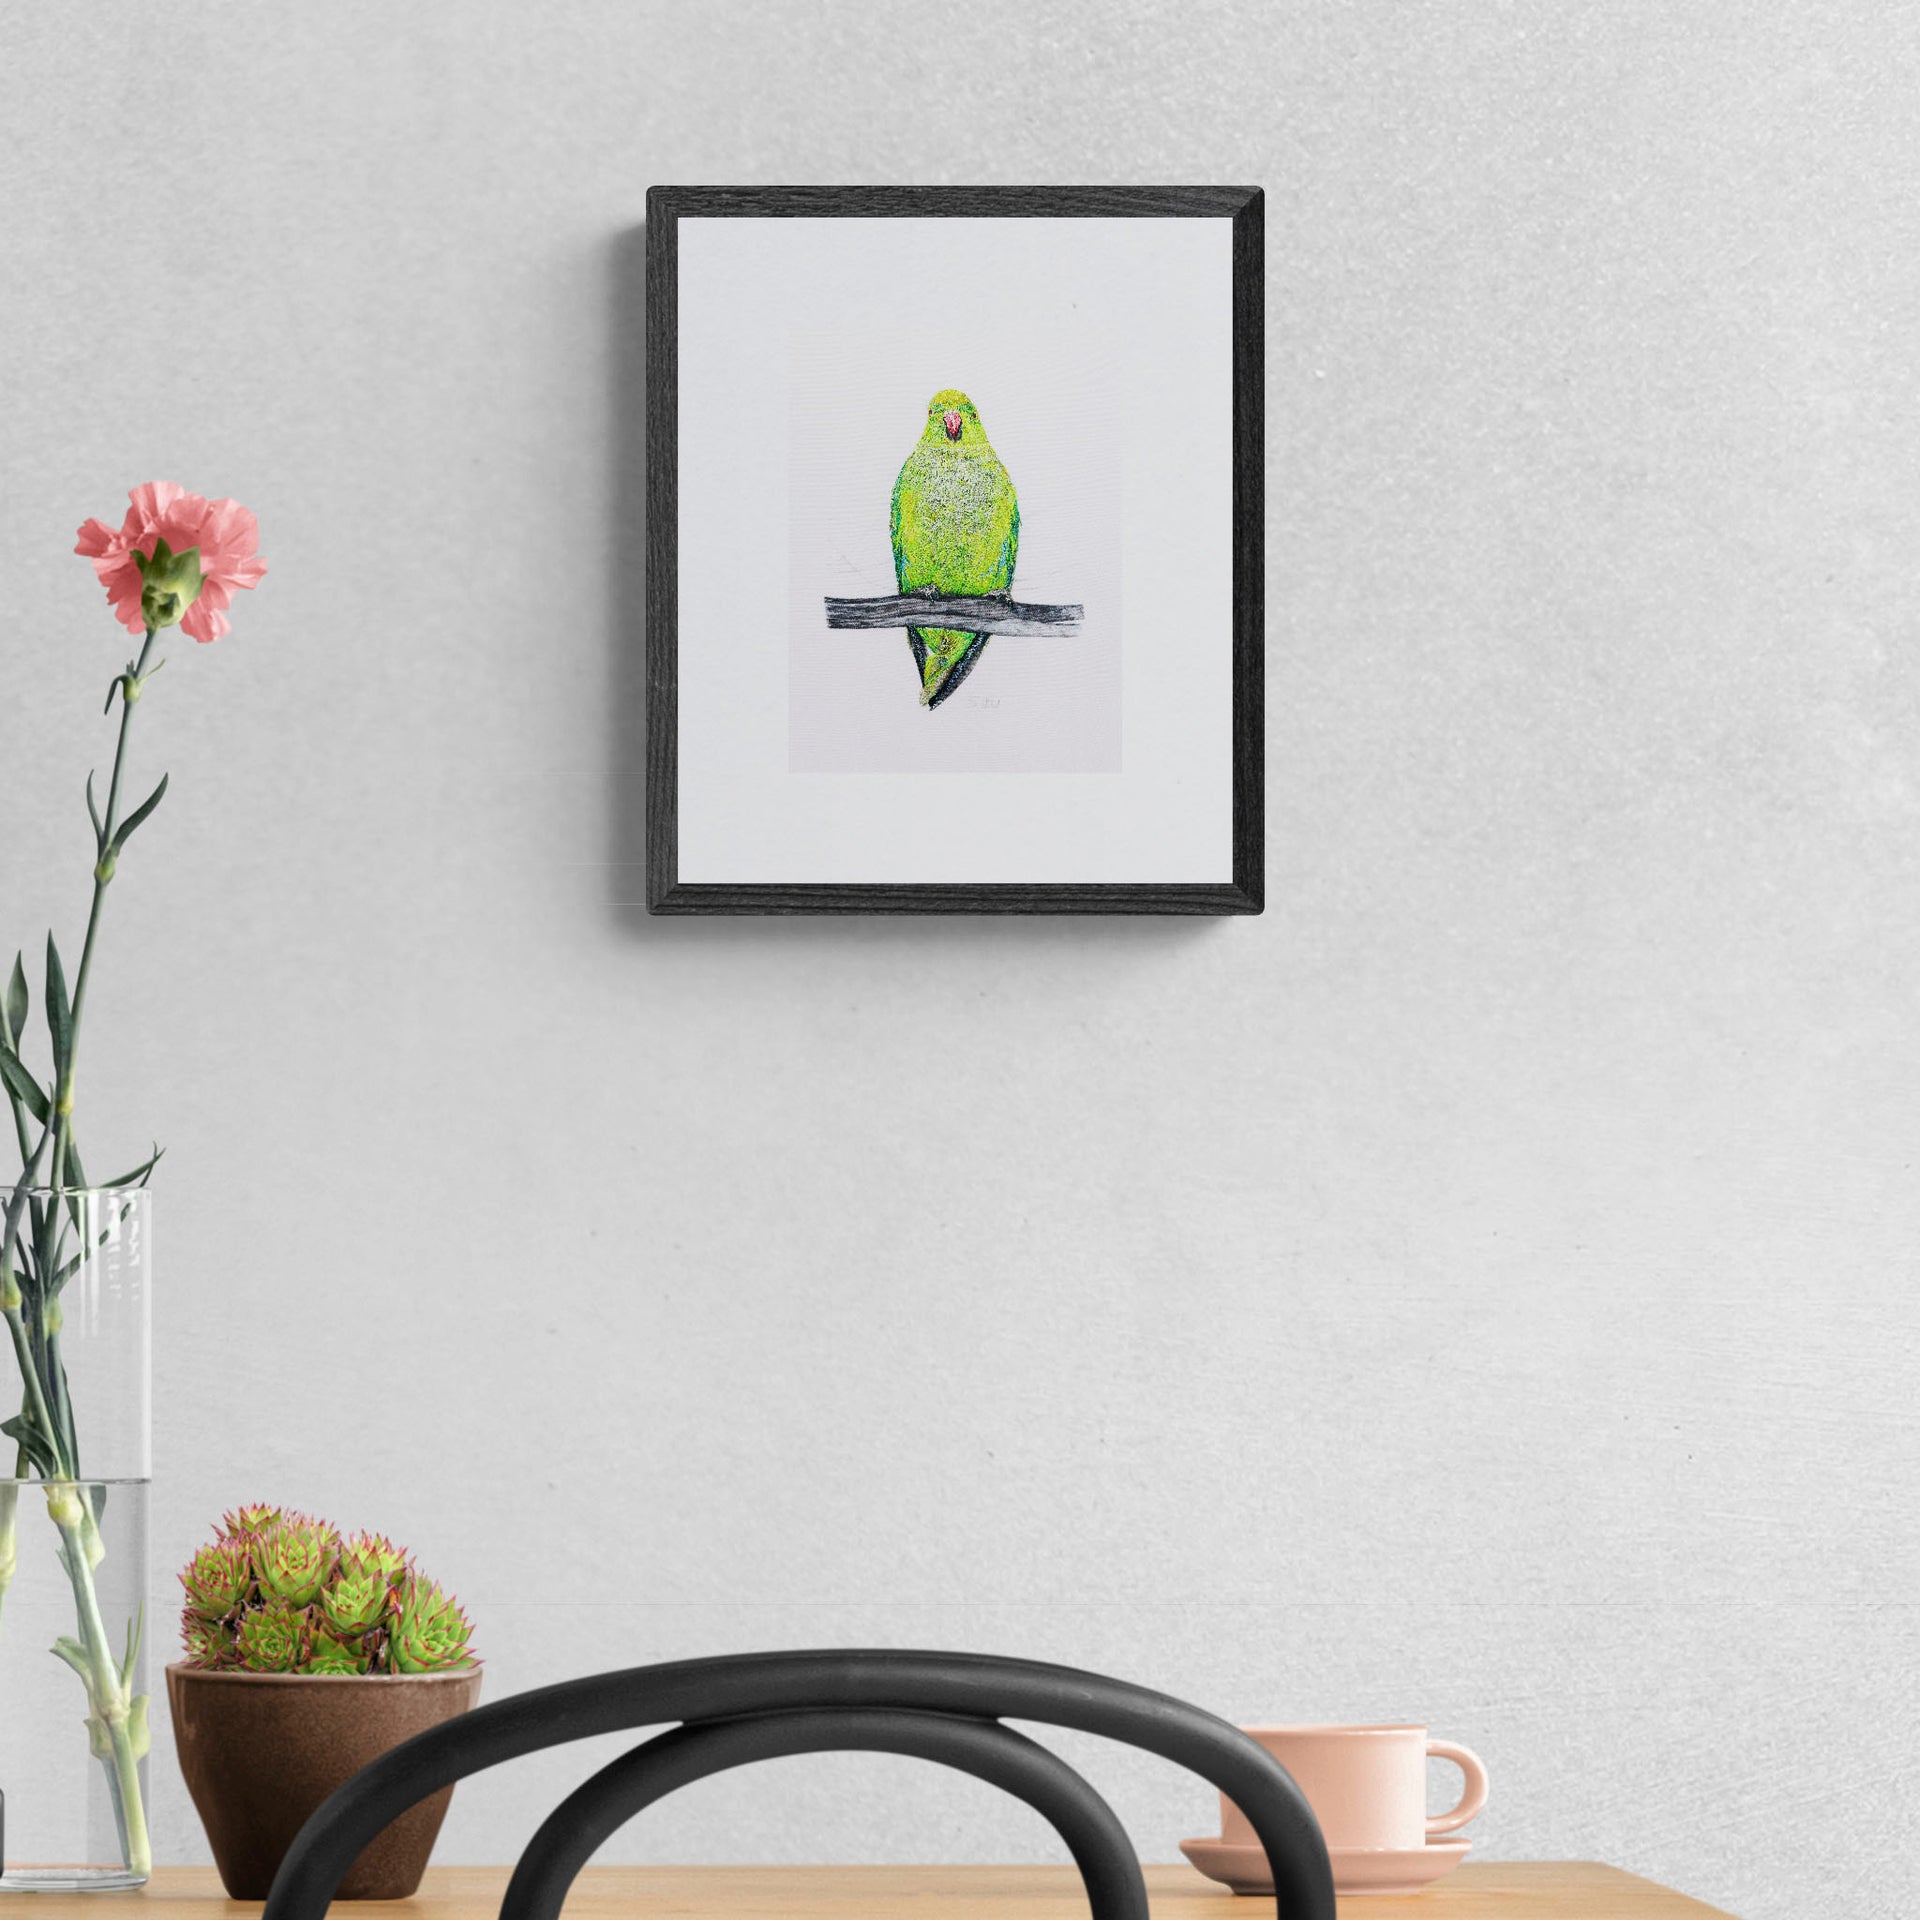 Hand embroidered parakeet in black frame